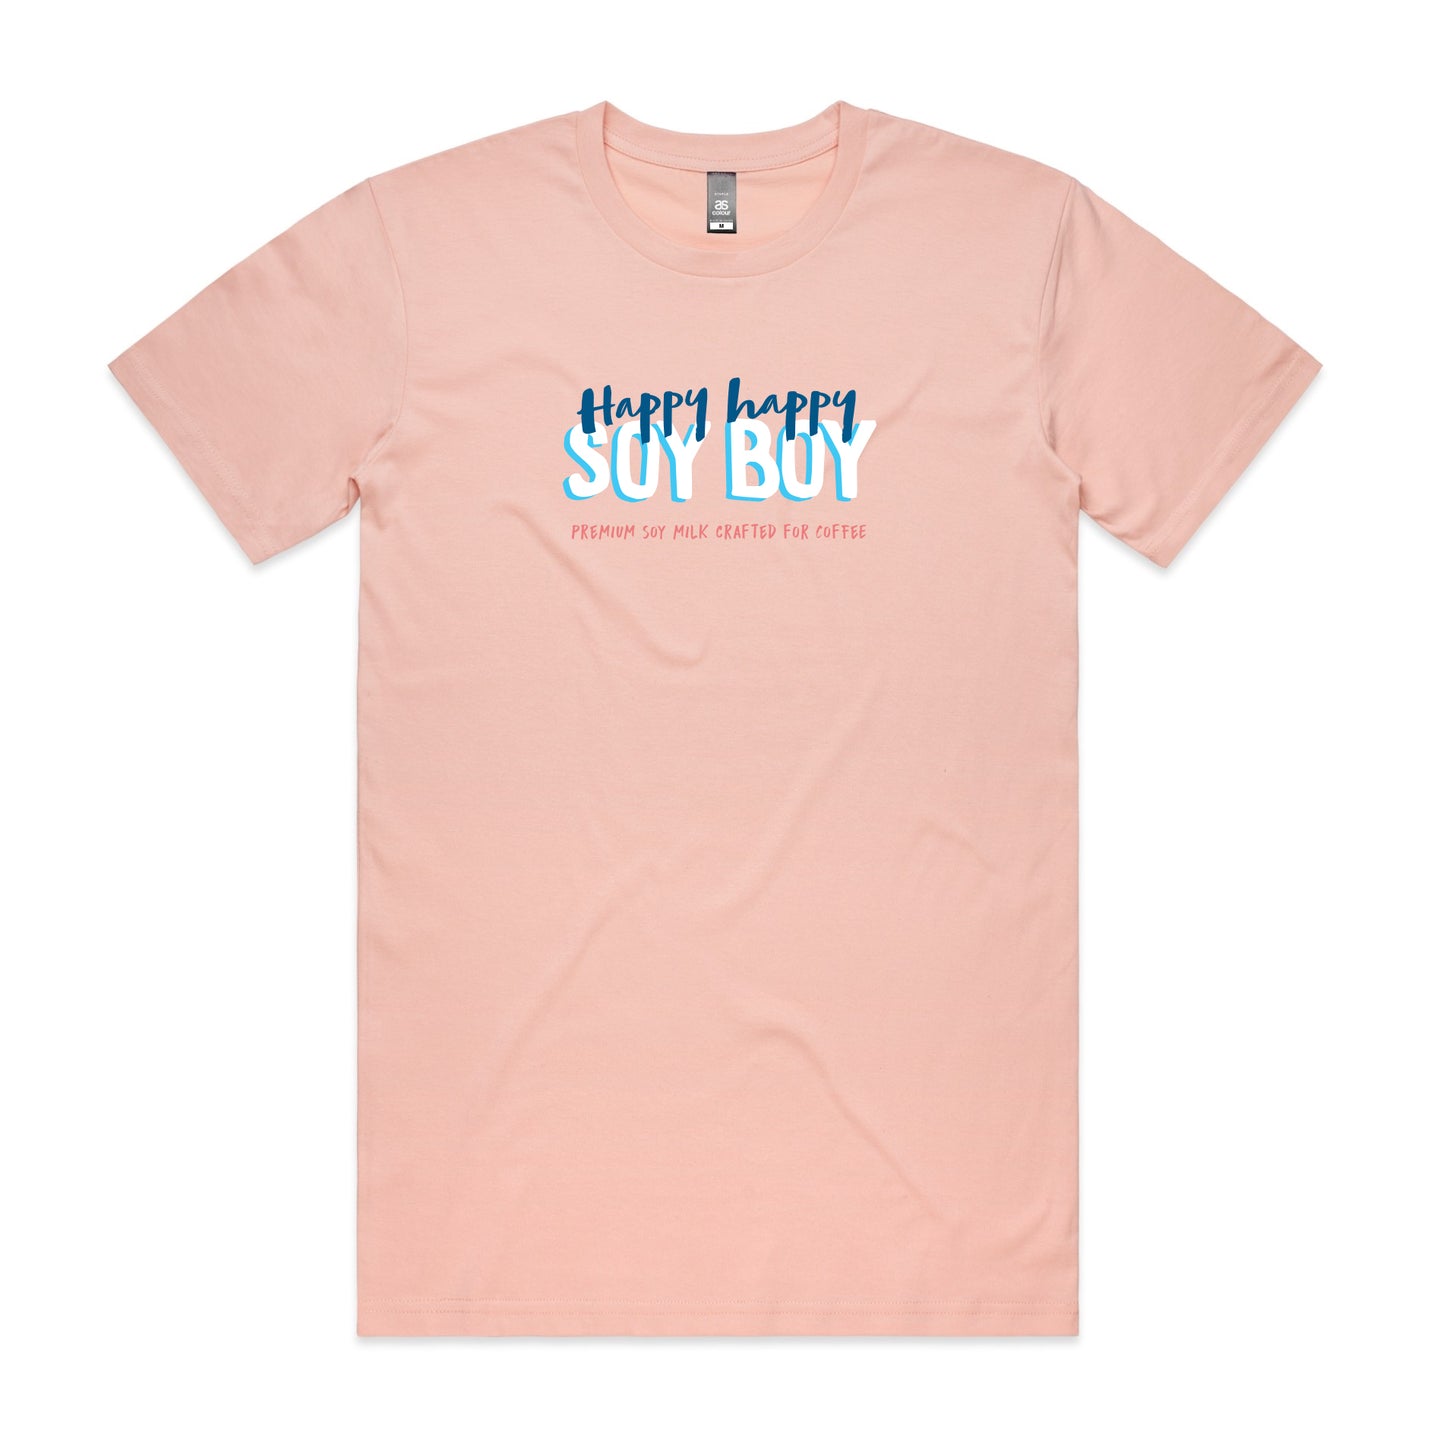 Happy Happy Soy Boy T-shirt